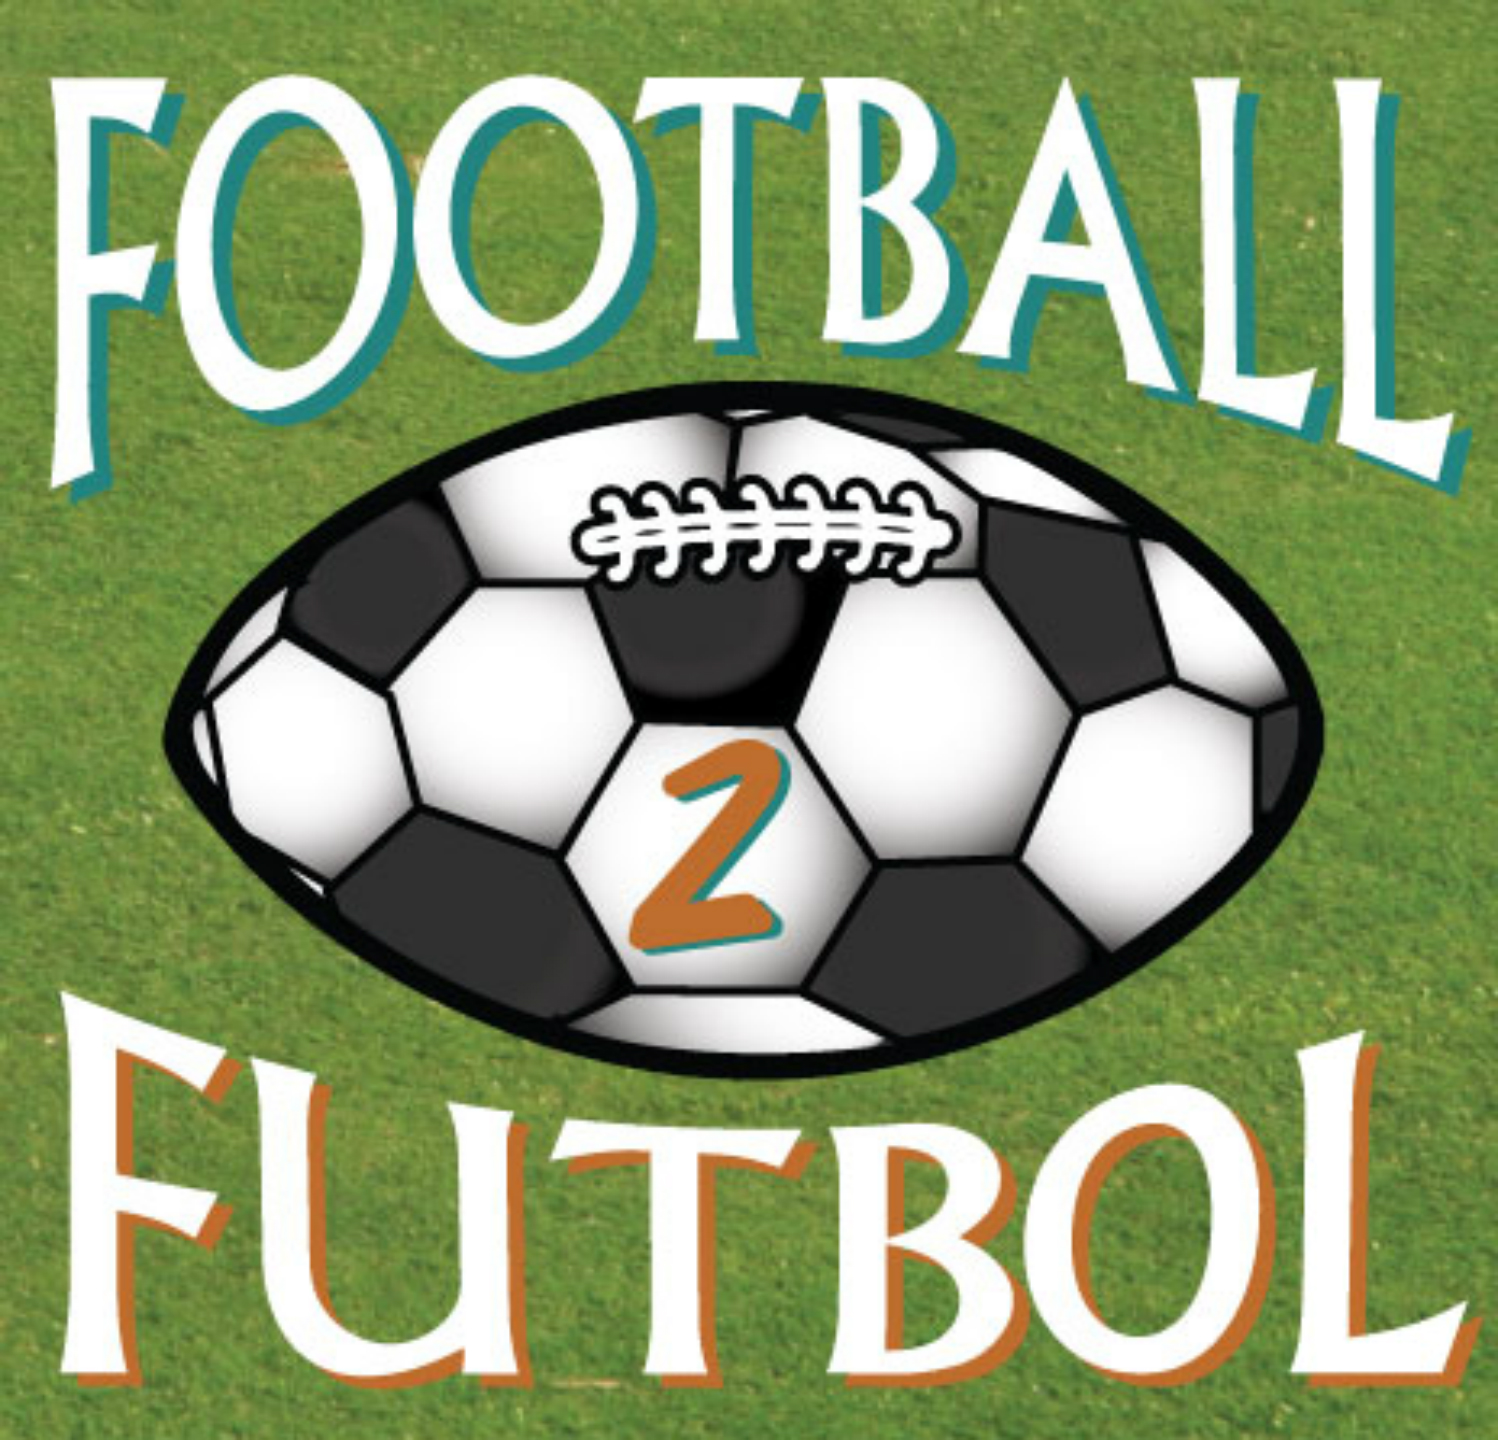 Football 2 Futbol:  AFC North Division Preview & MLB Trade Deadline Talk